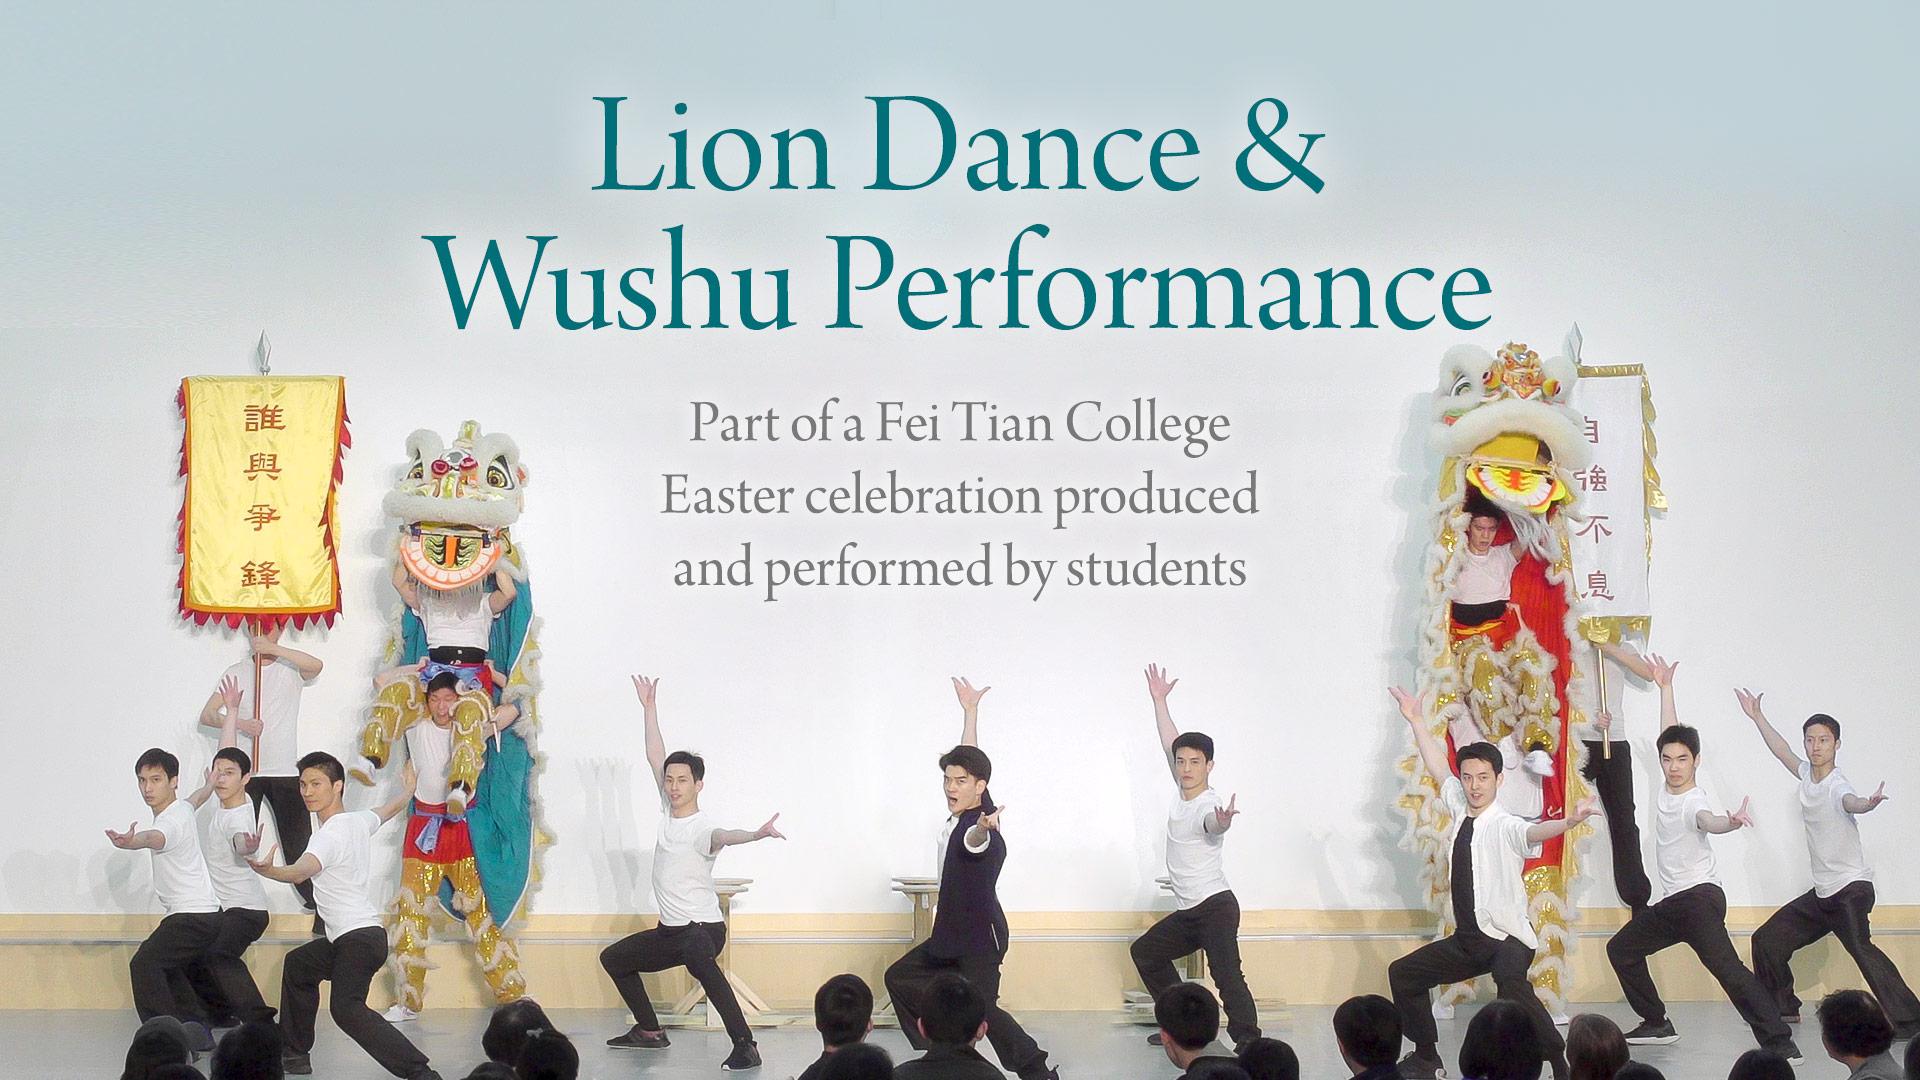 Lion Dance & Wushu Performance